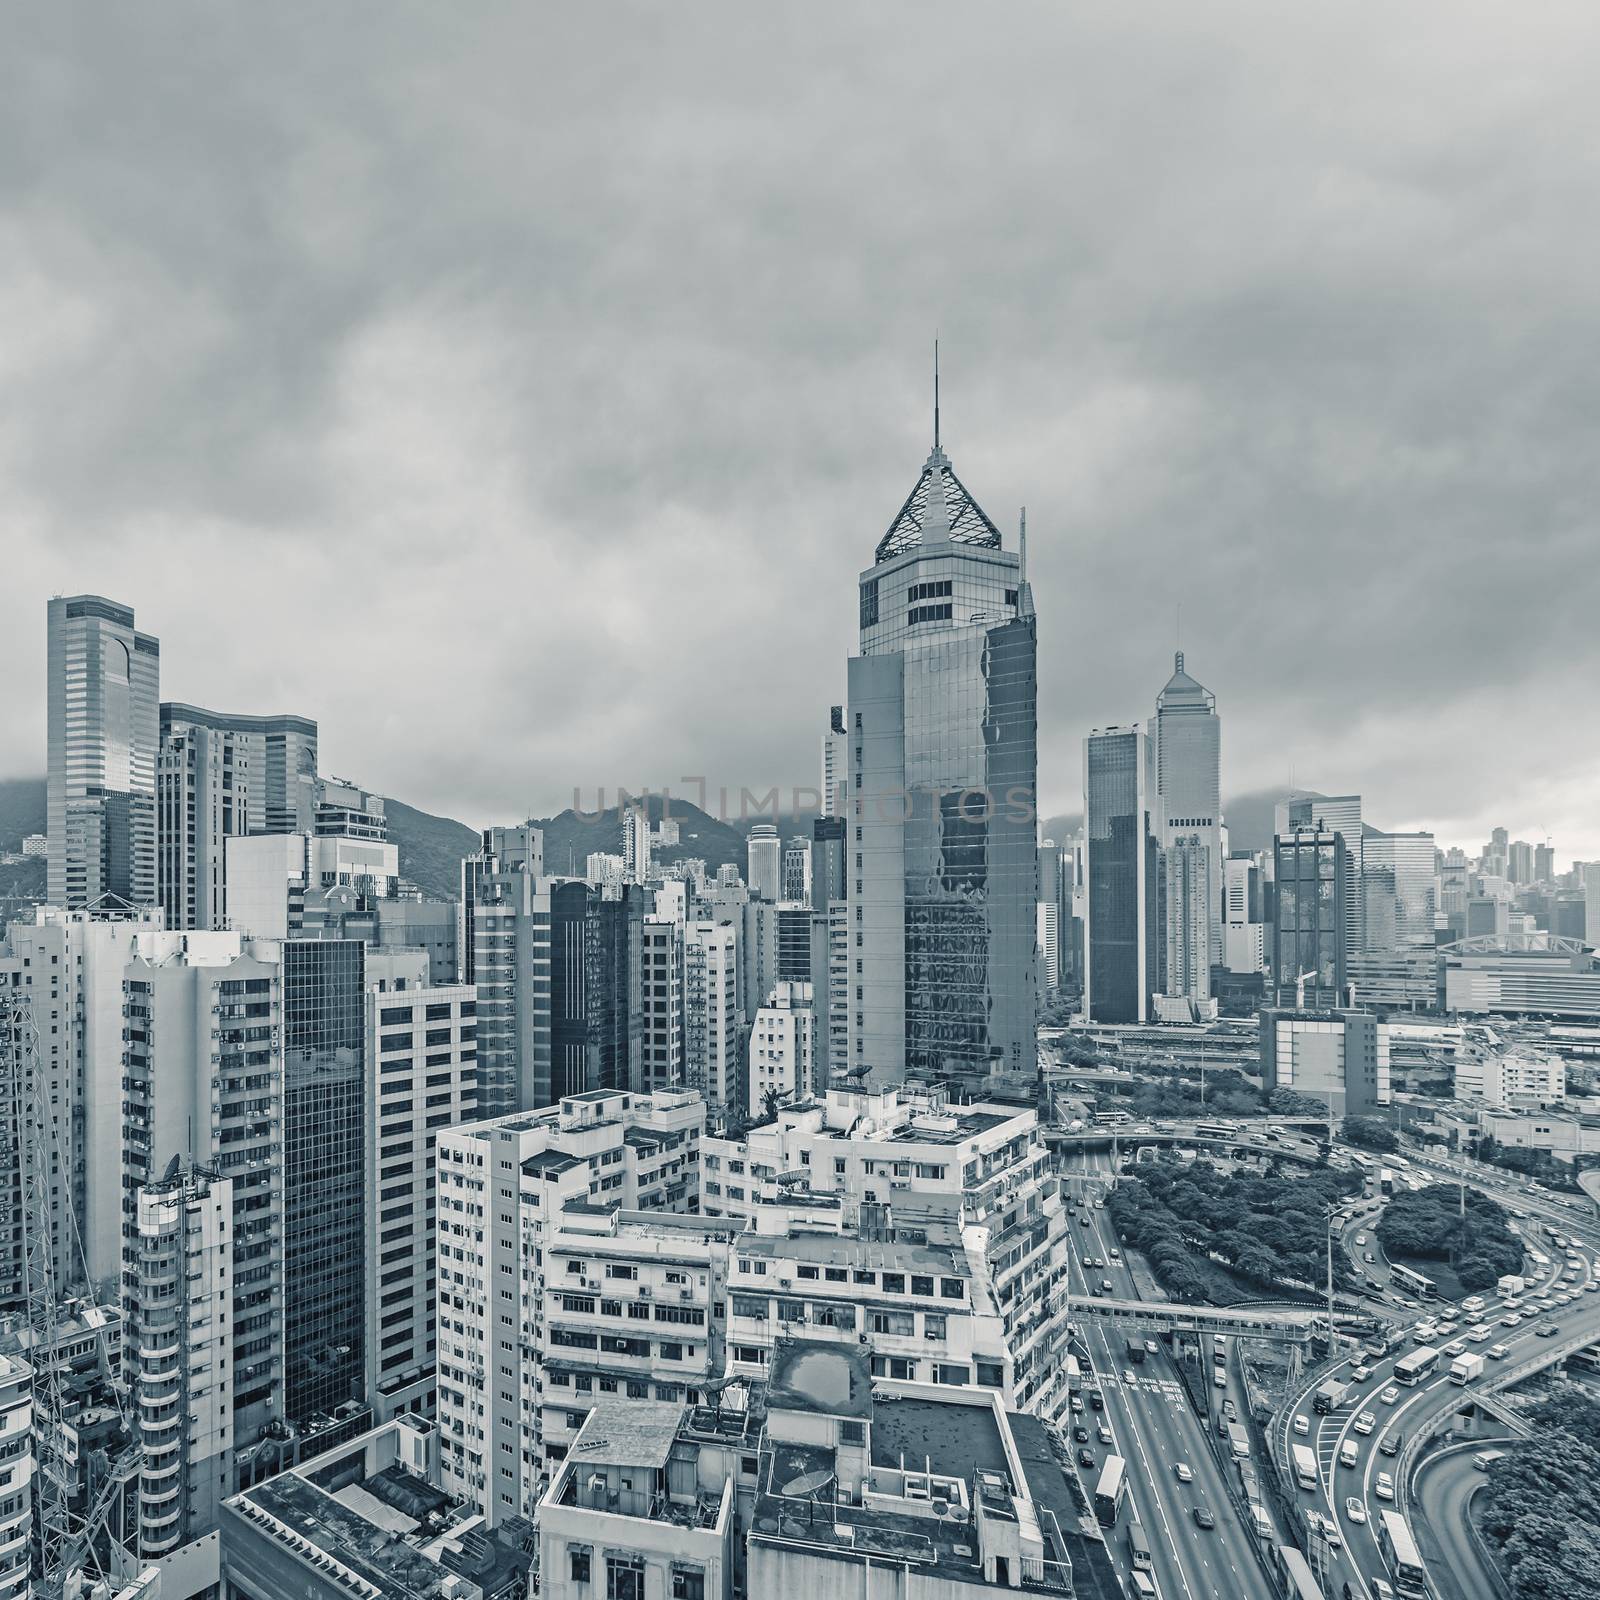 Cityscape of Hong Kong by elwynn